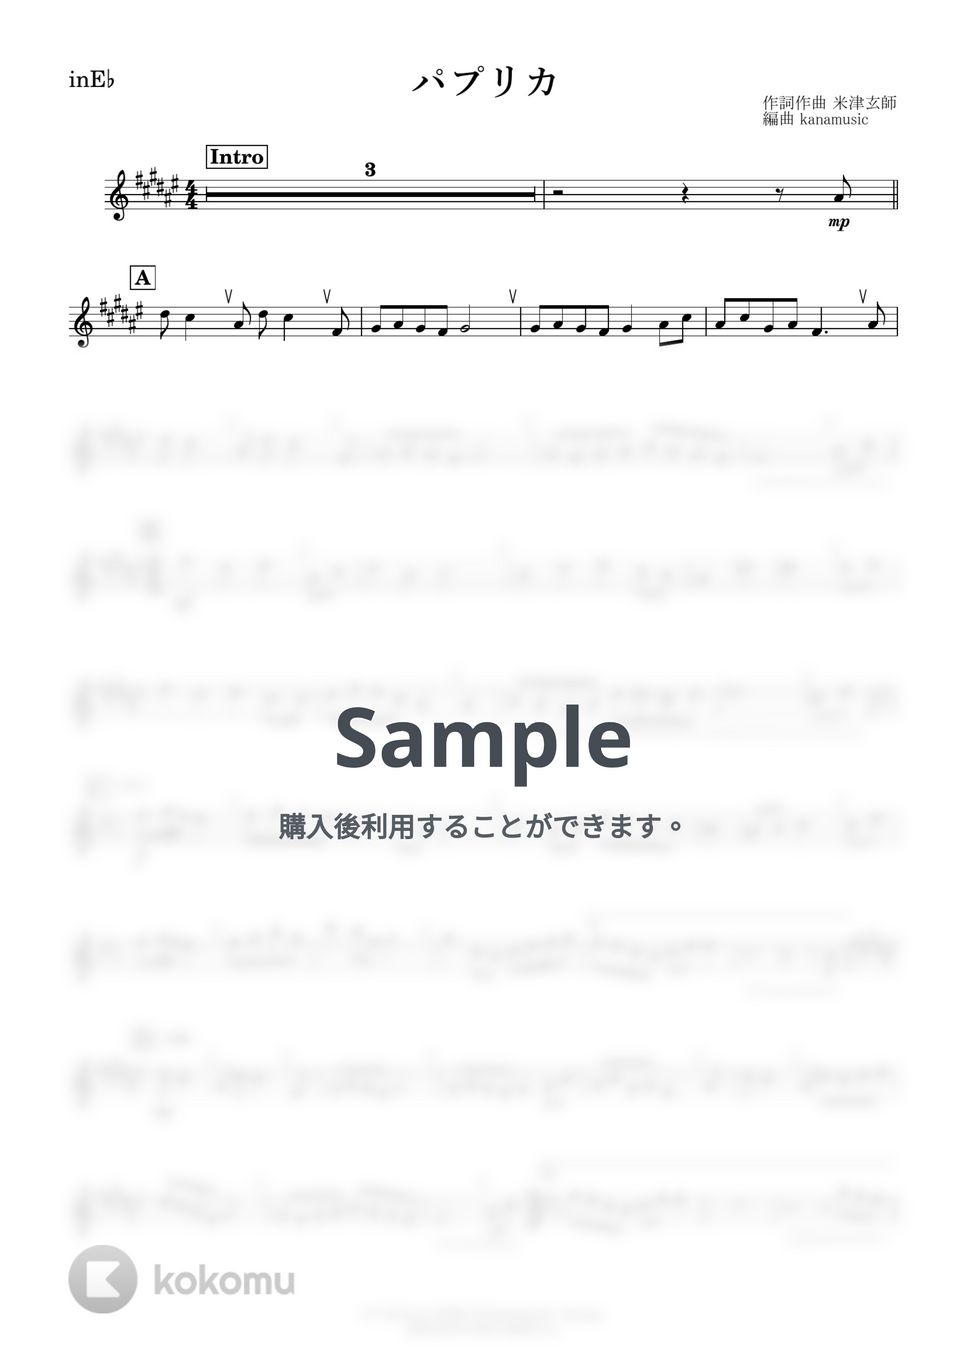 Foorin - パプリカ (E♭) by kanamusic